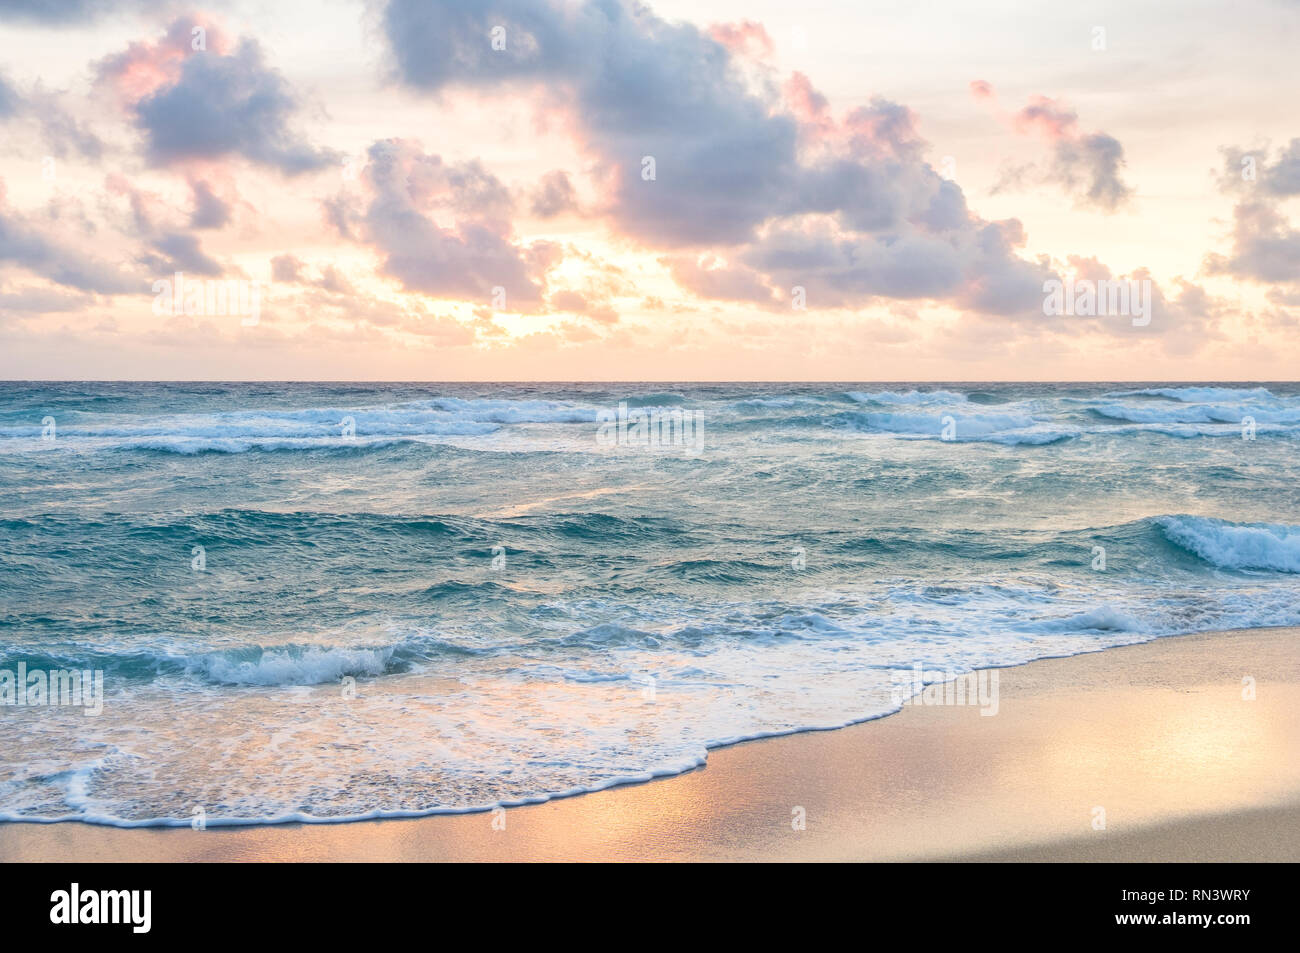 Waves on beach in Boca Raton, Florida Stock Photo